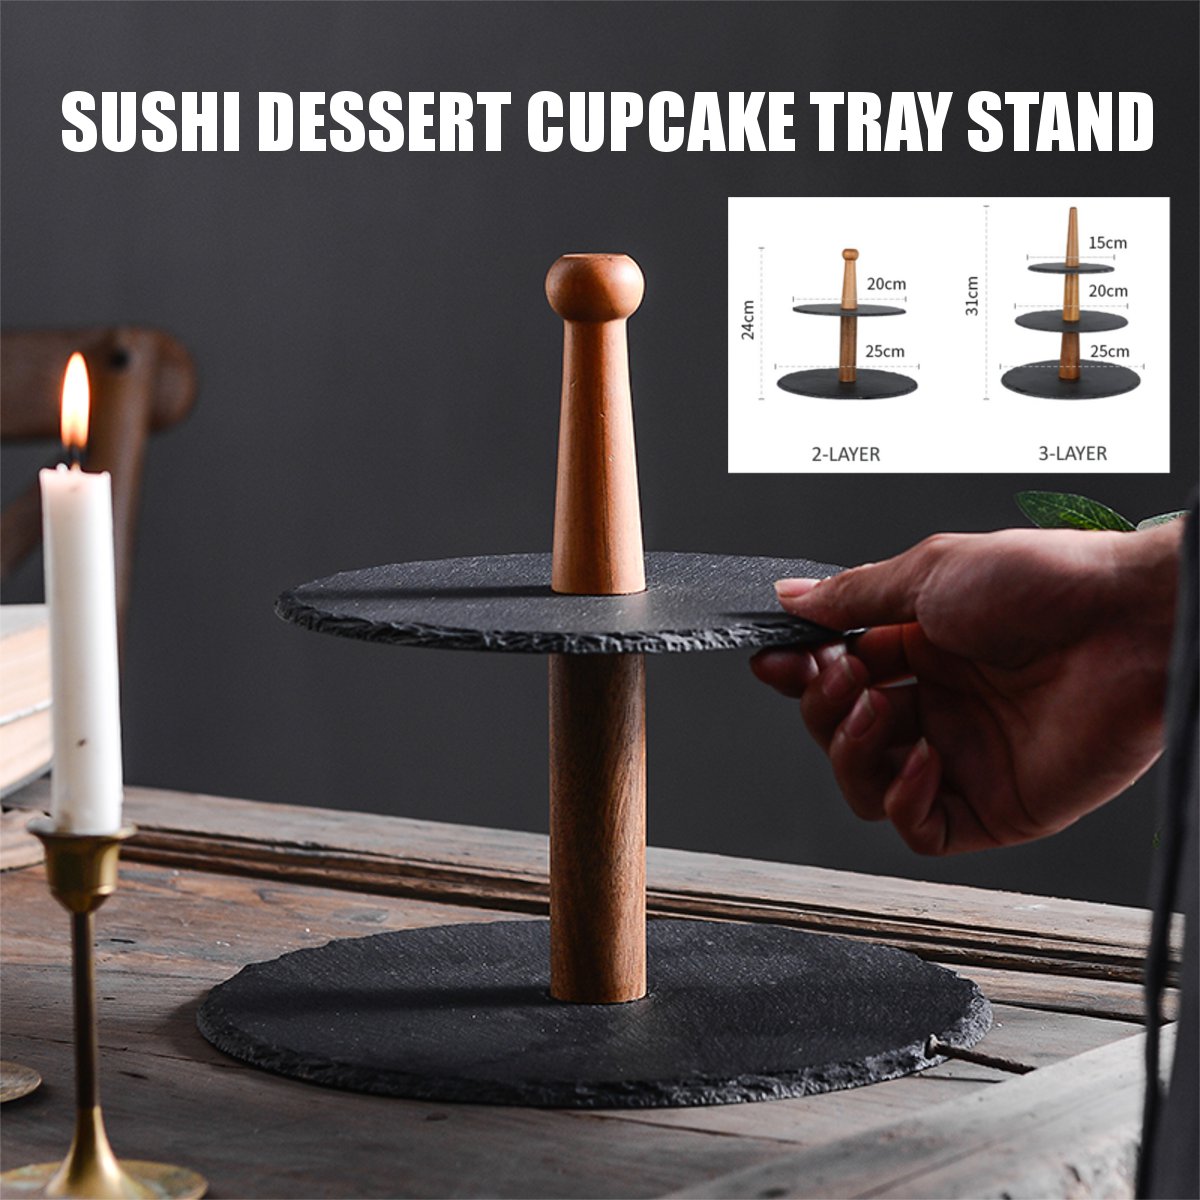 Sushi-Sashimi-Wooden-Rock-Tray-Dessert-Cake-Dinner-Cupcake-Display-Holder-Stand-1679105-1